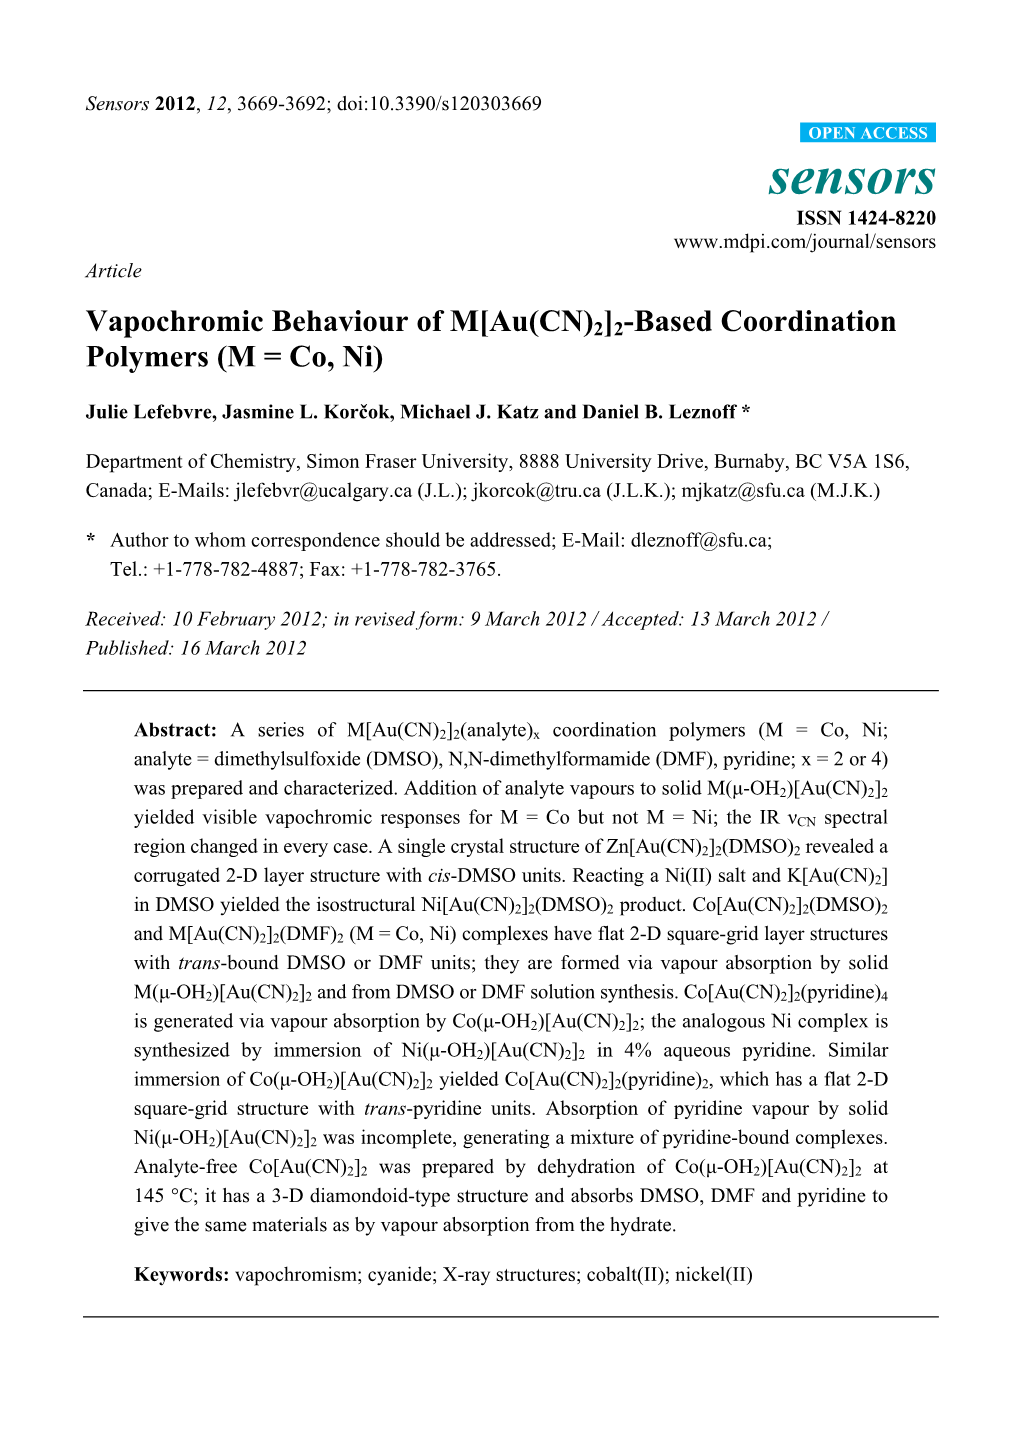 Vapochromic Behaviour of M[Au(CN)2]2-Based Coordination Polymers (M = Co, Ni)